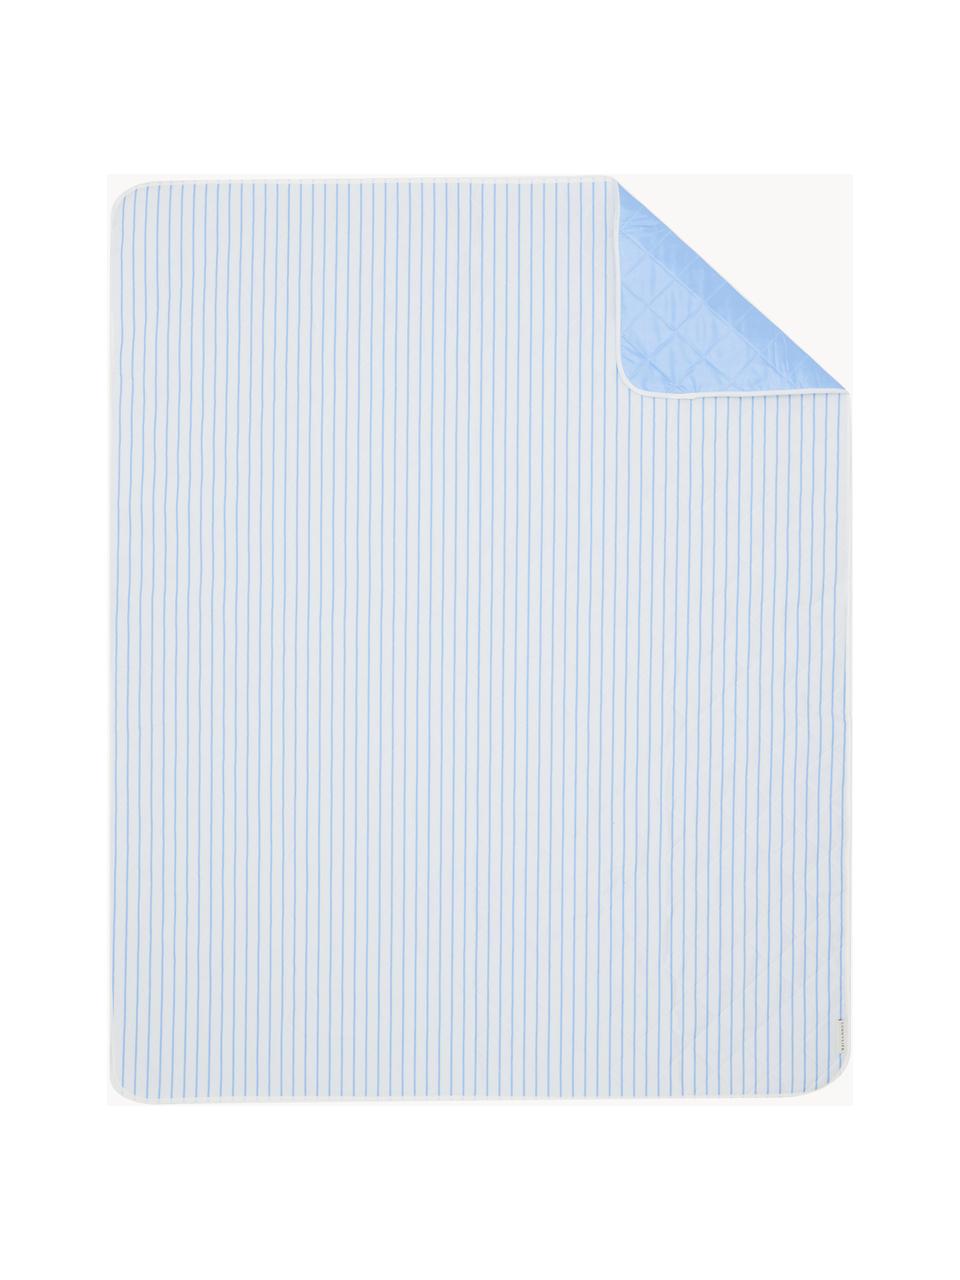 Strand- und Picknickdecke Le Weekend, 100 % Polyester, Off White, Hellblau, dünne Streifen, B 140 x L 175 cm